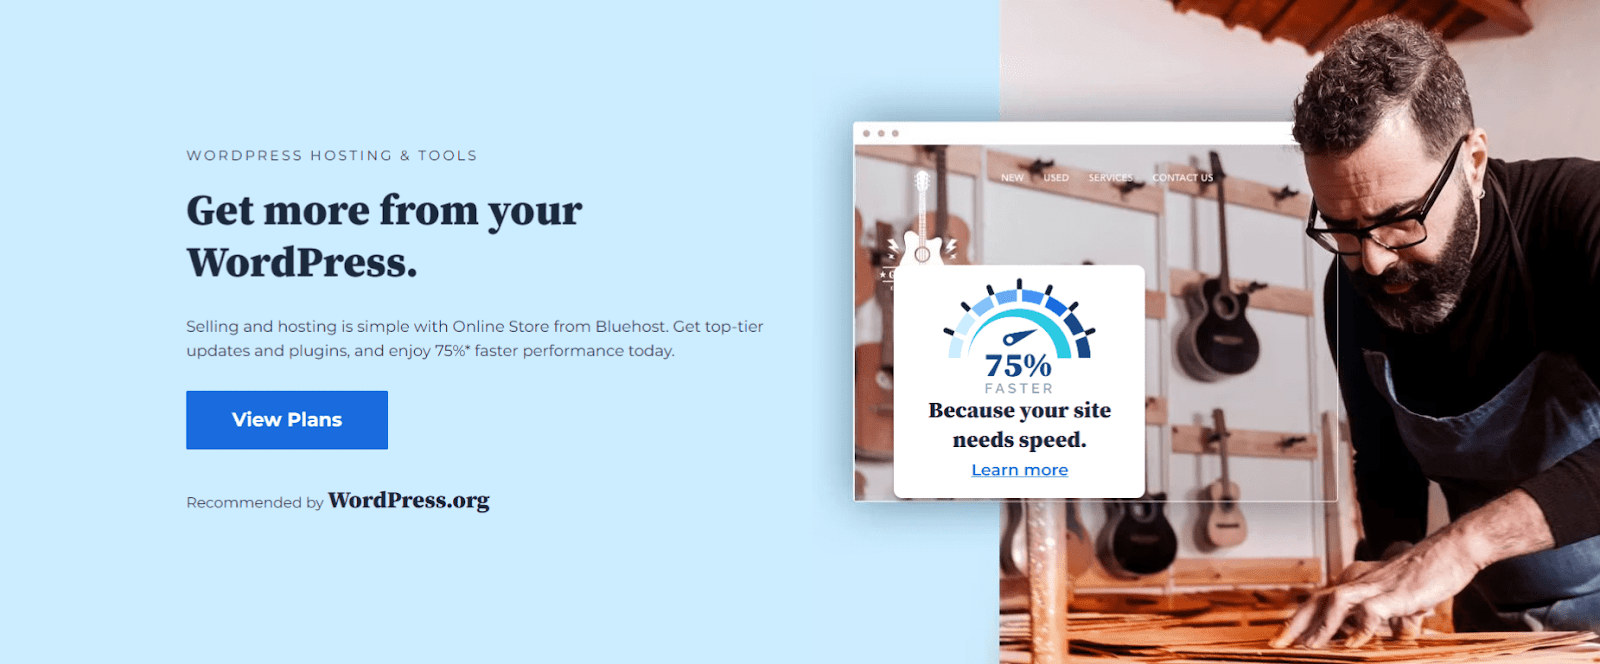 Bluehost’s WordPress hosting page.